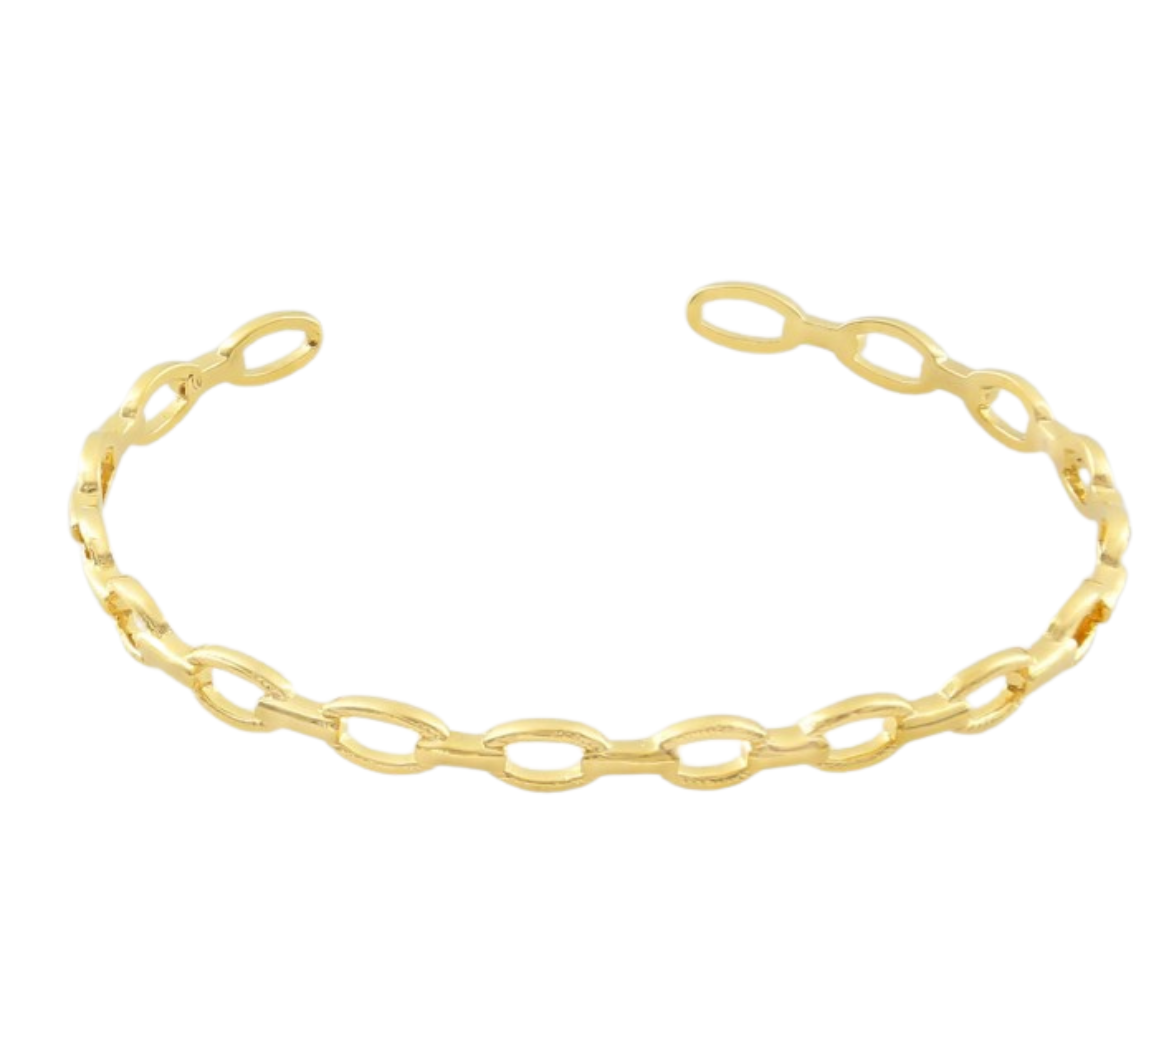 Gold Chain Link Cuff